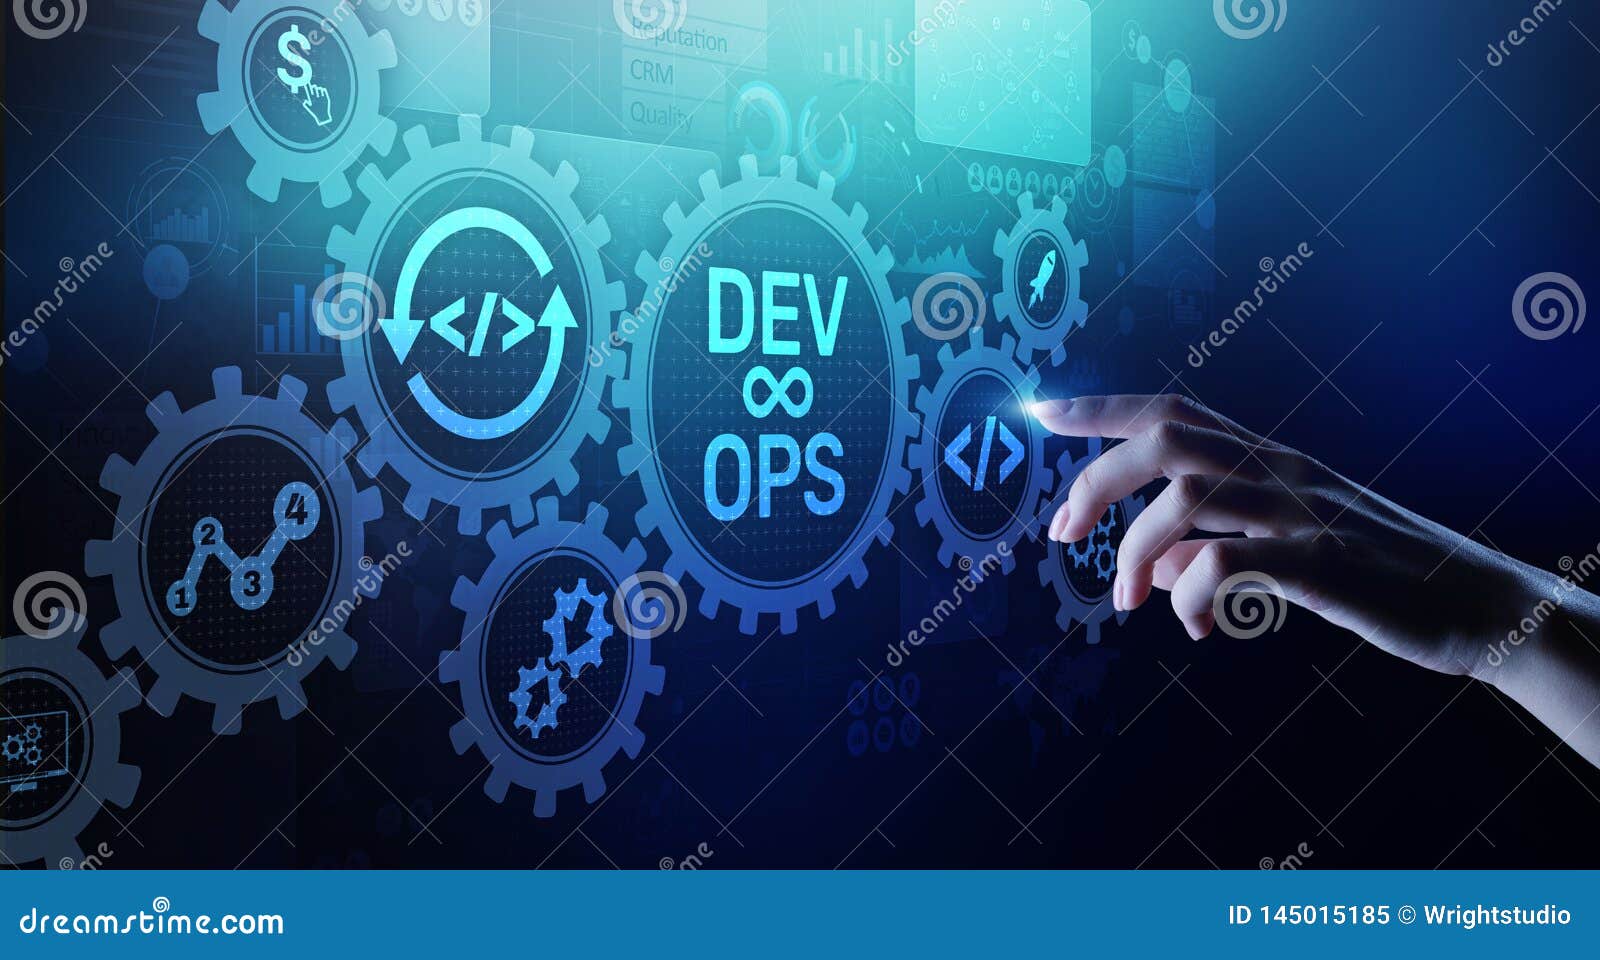 devops agile development concept on virtual screen.